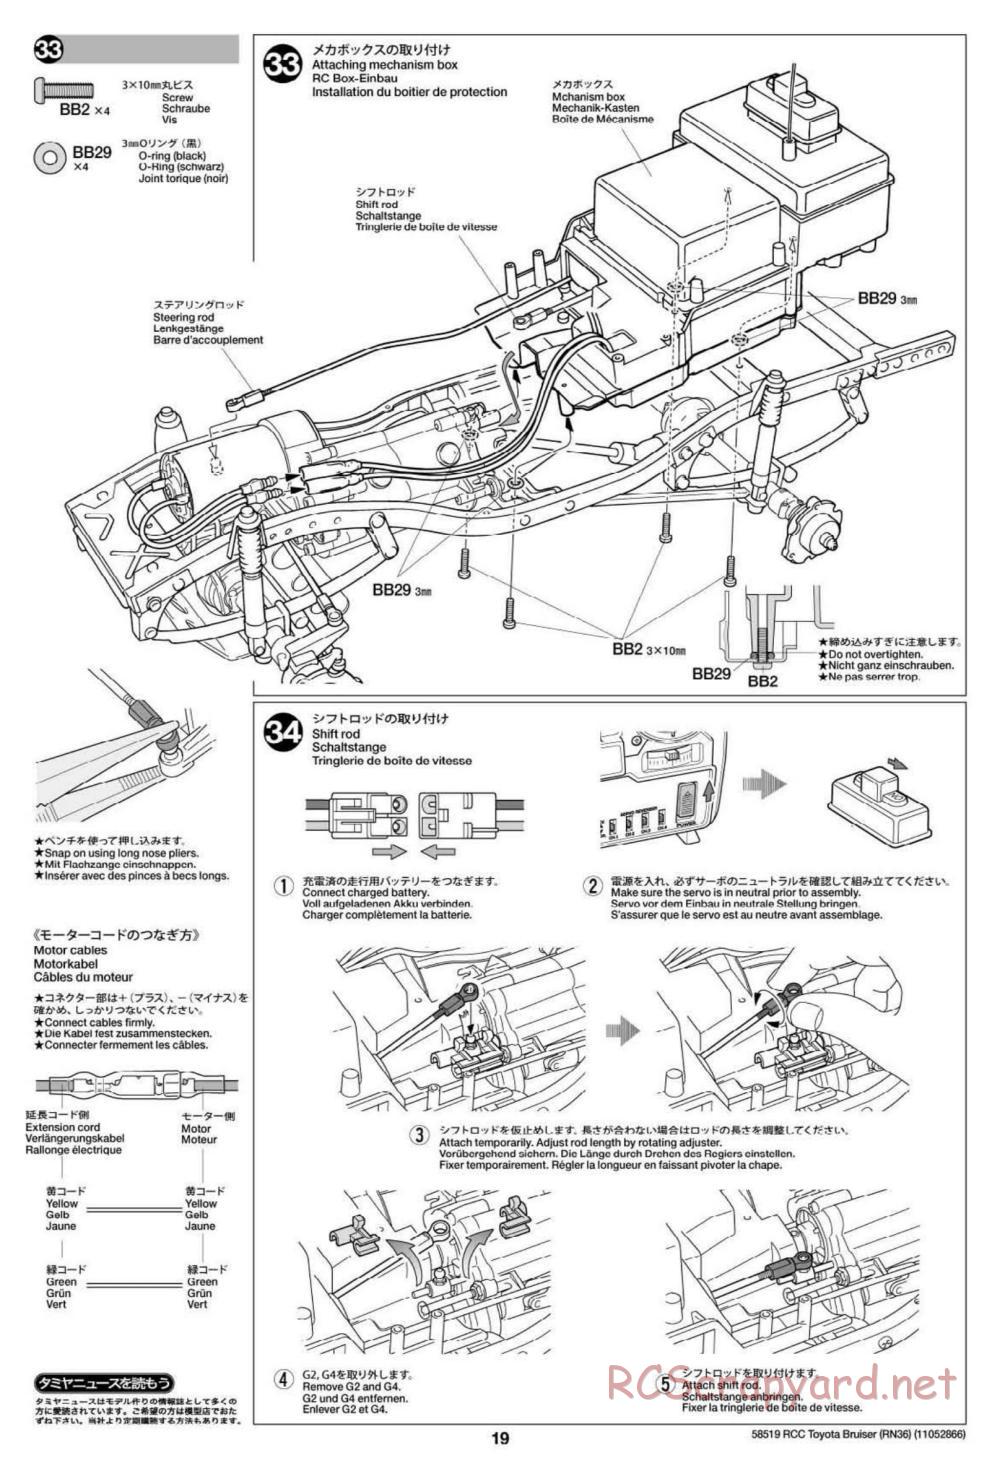 Tamiya - Toyota 4x4 Pick Up Bruiser Chassis - Manual - Page 19